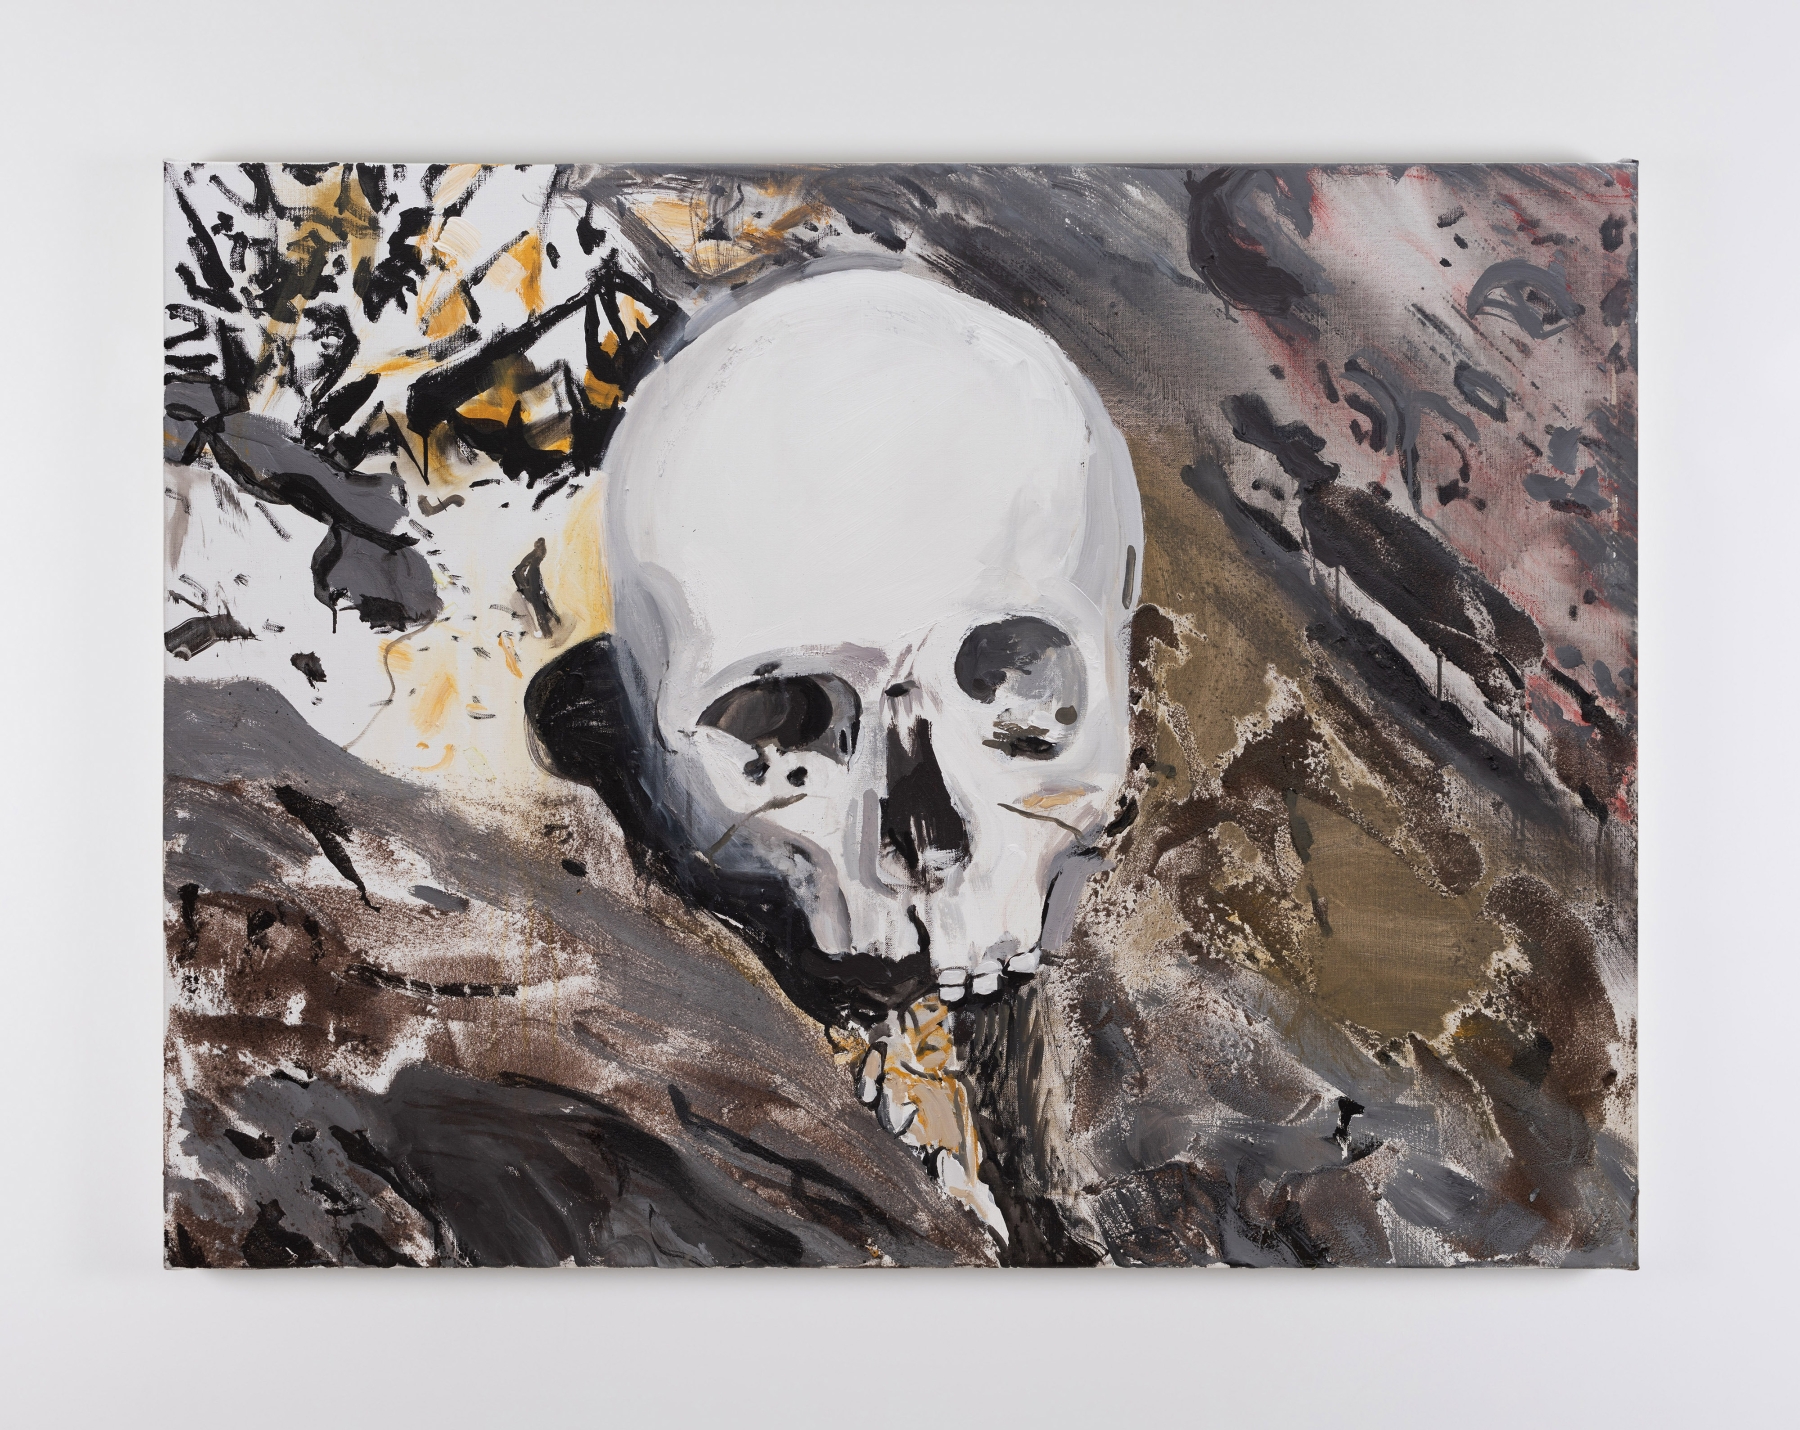 Brian Maguire&amp;nbsp;
Arizona 13, 2022
acrylic on canvas
90 x 120 cm / 35.4 x 47.2 in